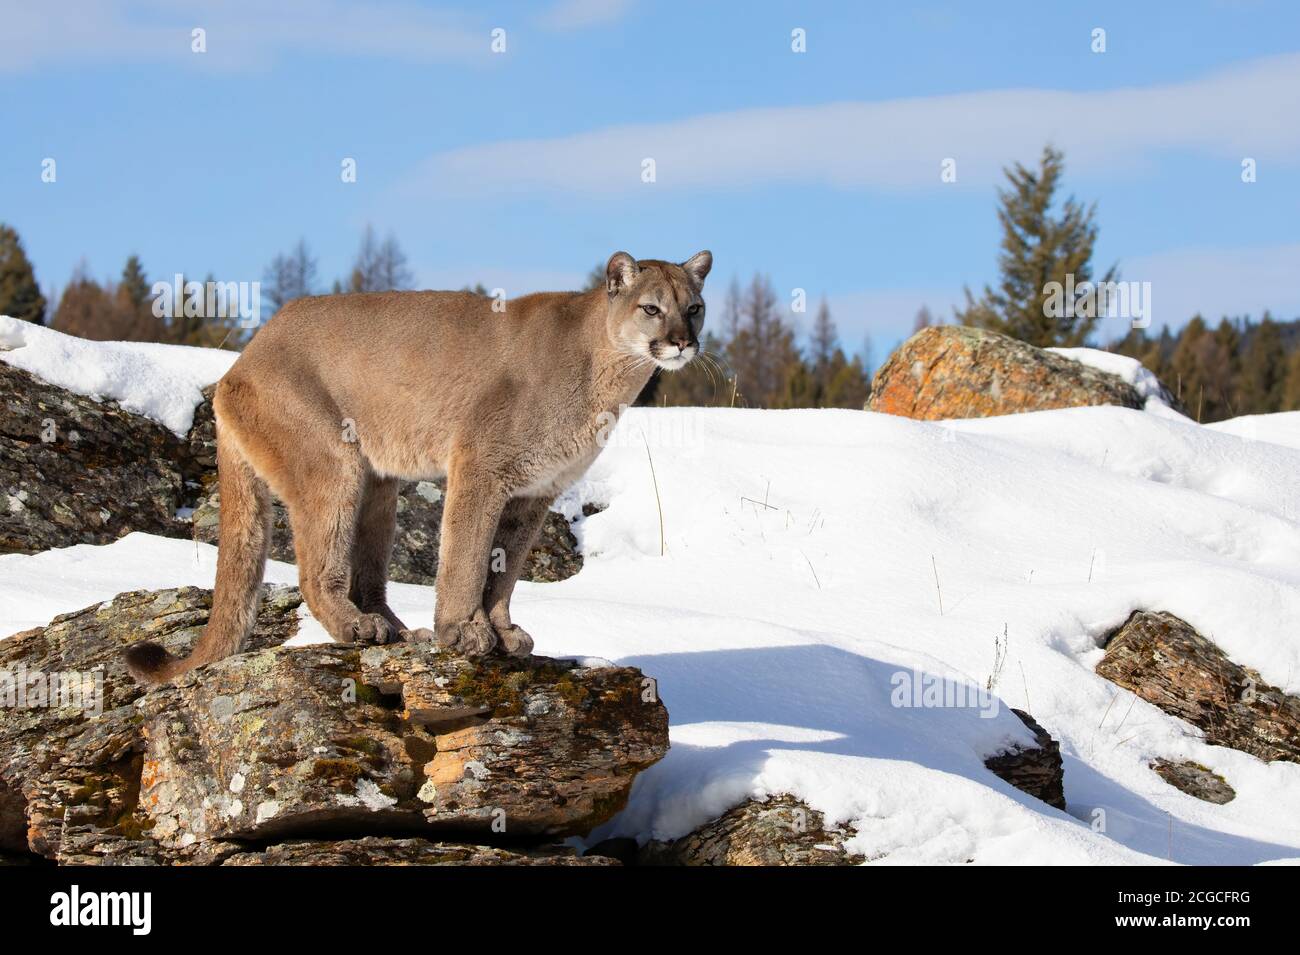 Cougar or Mountain lion (Puma concolor) walking through the mountains in the winter snow in Montana, USA Stock Photo